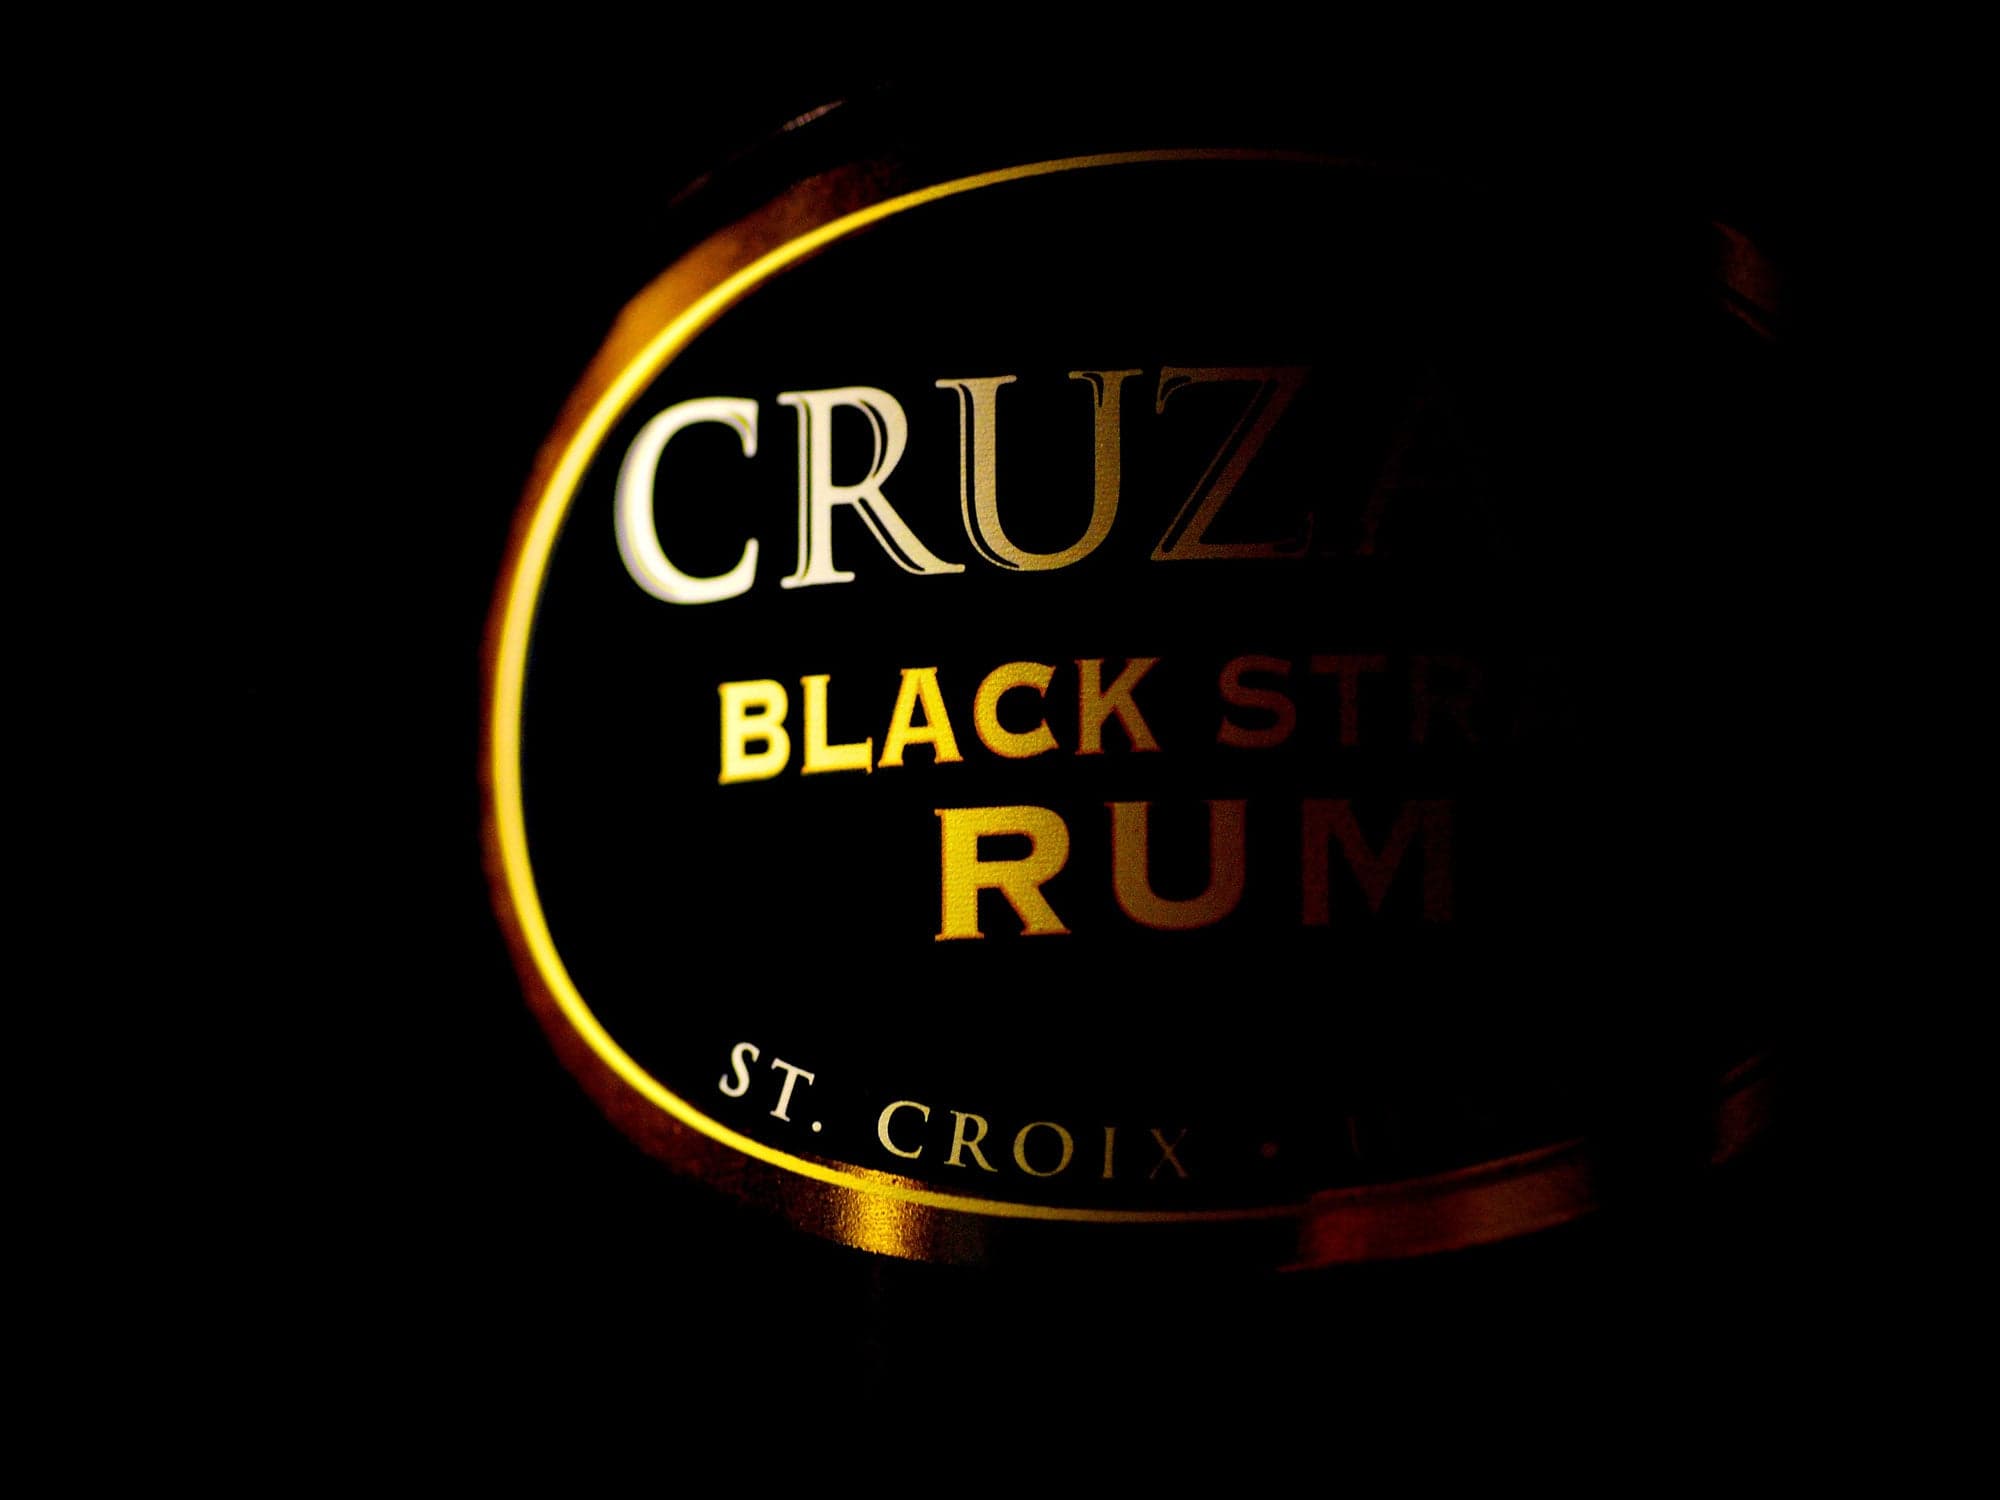 Cruzan Blackstrap Rum